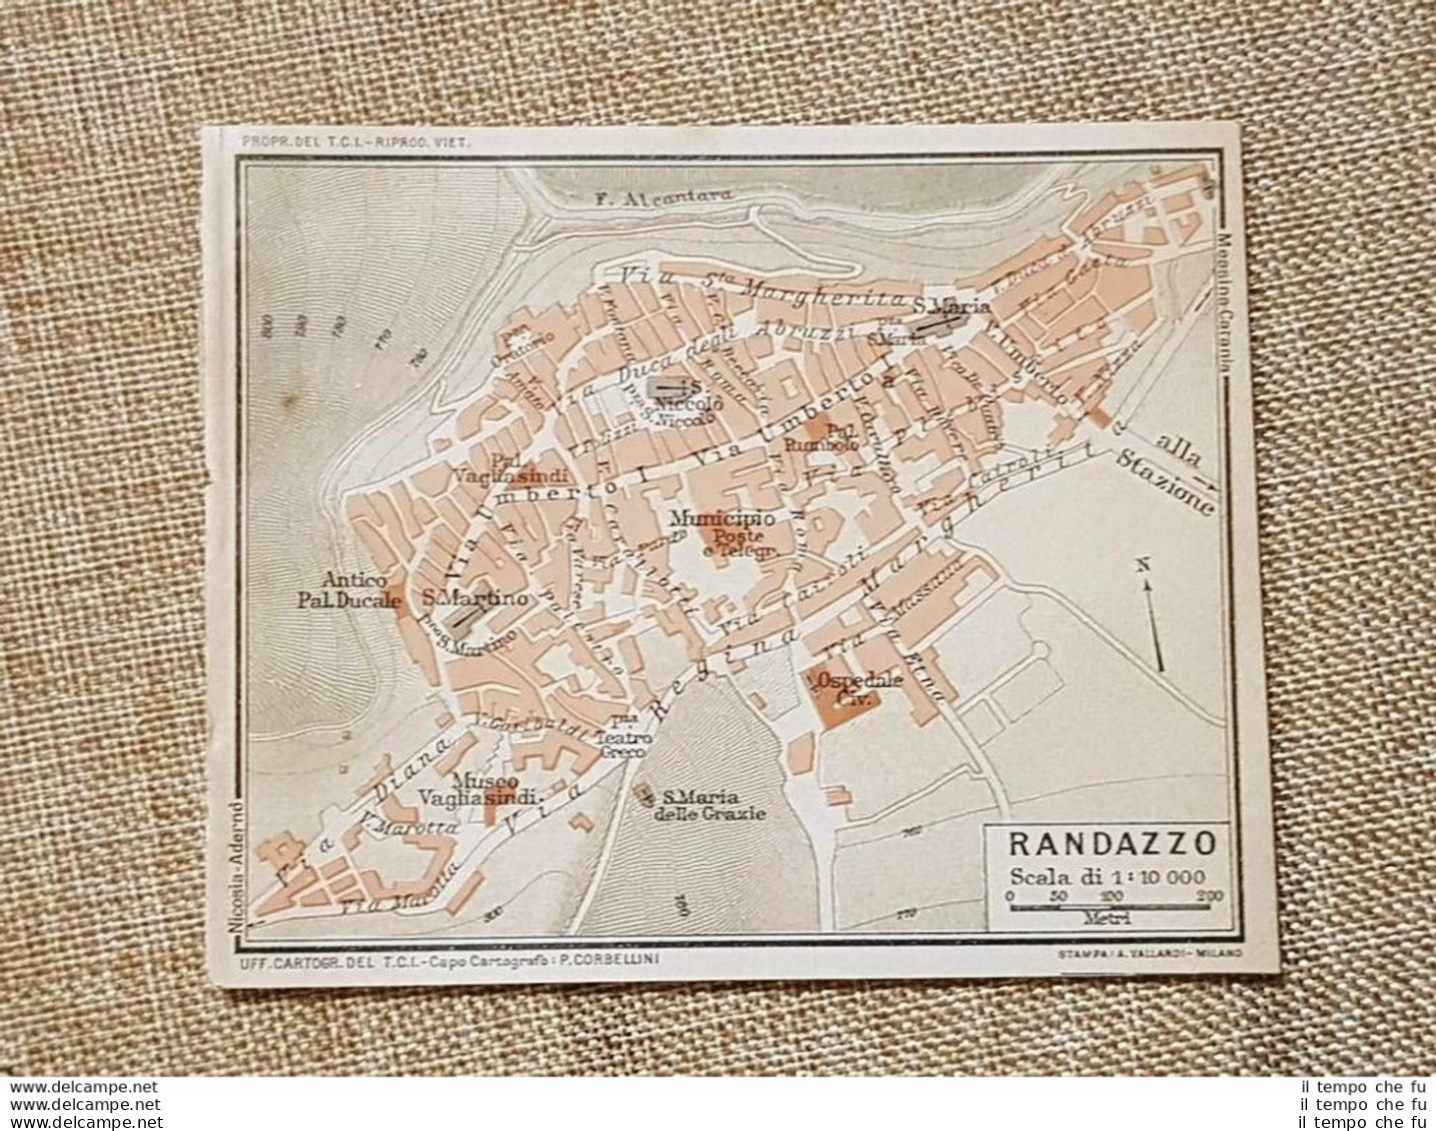 Pianta O Piantina Del 1919 La Città Di Randazzo Catania Sicilia T.C.I. - Landkarten